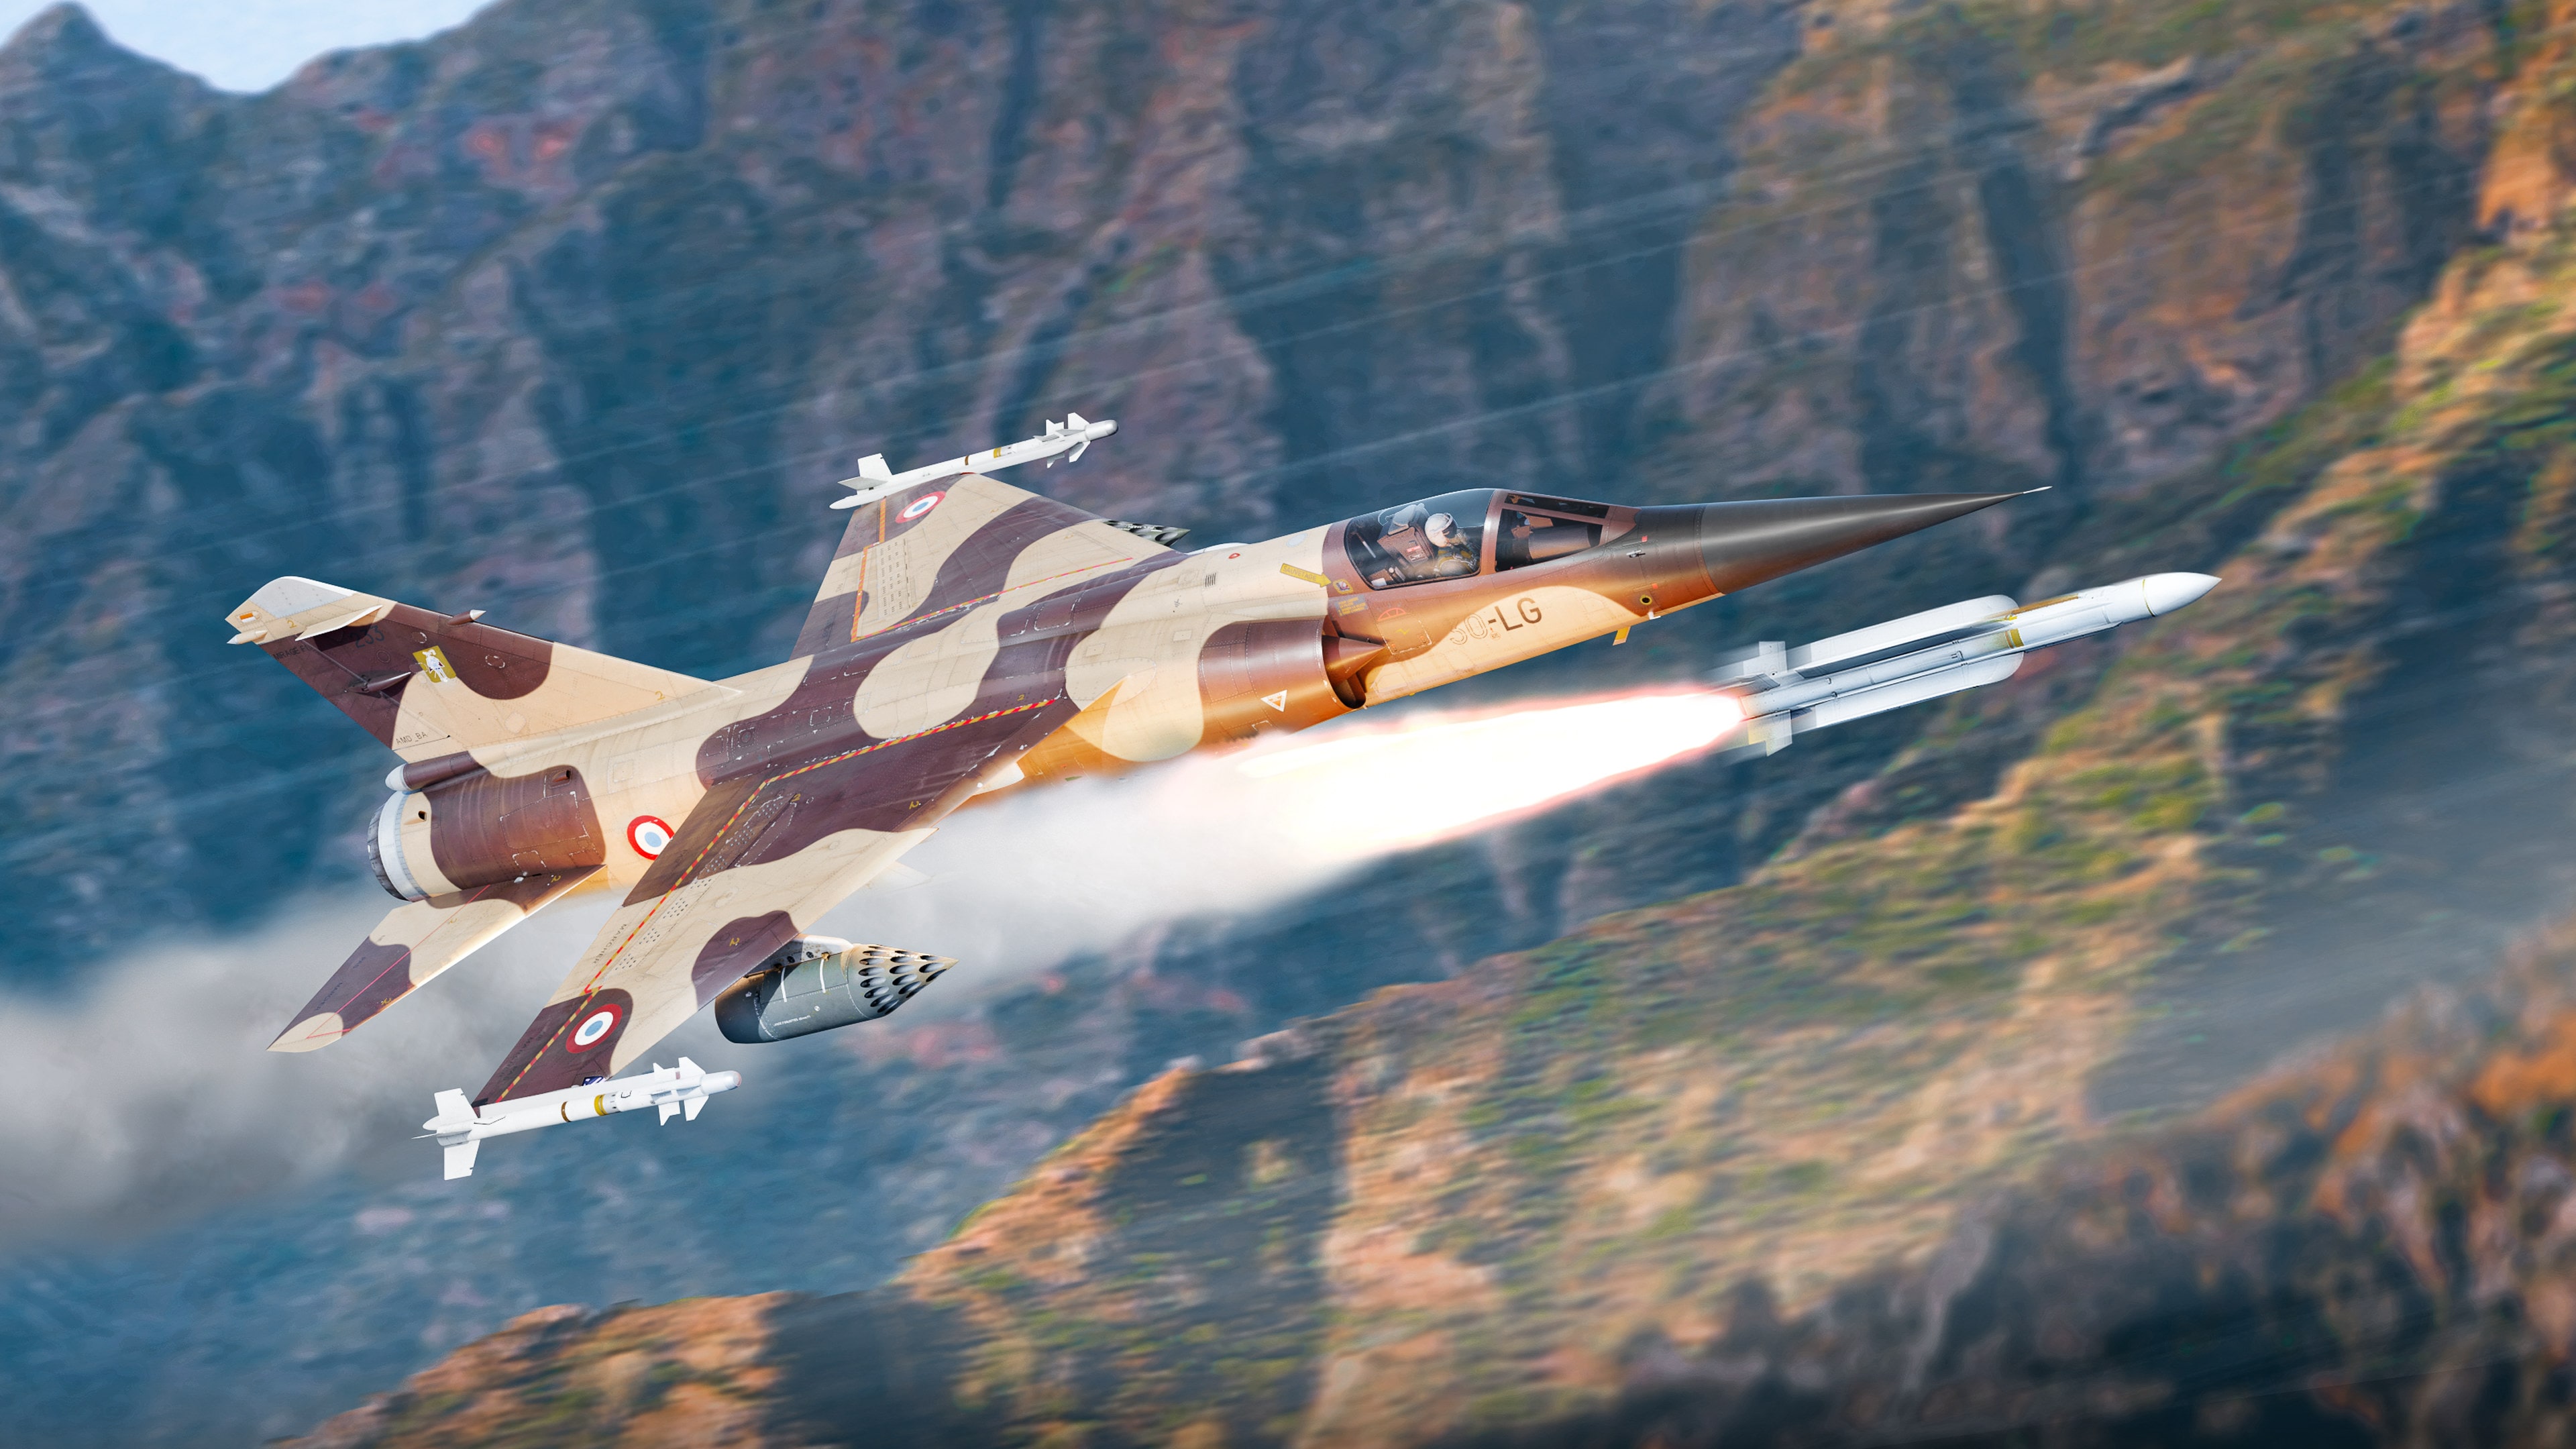 War Thunder - Mirage F1C-200